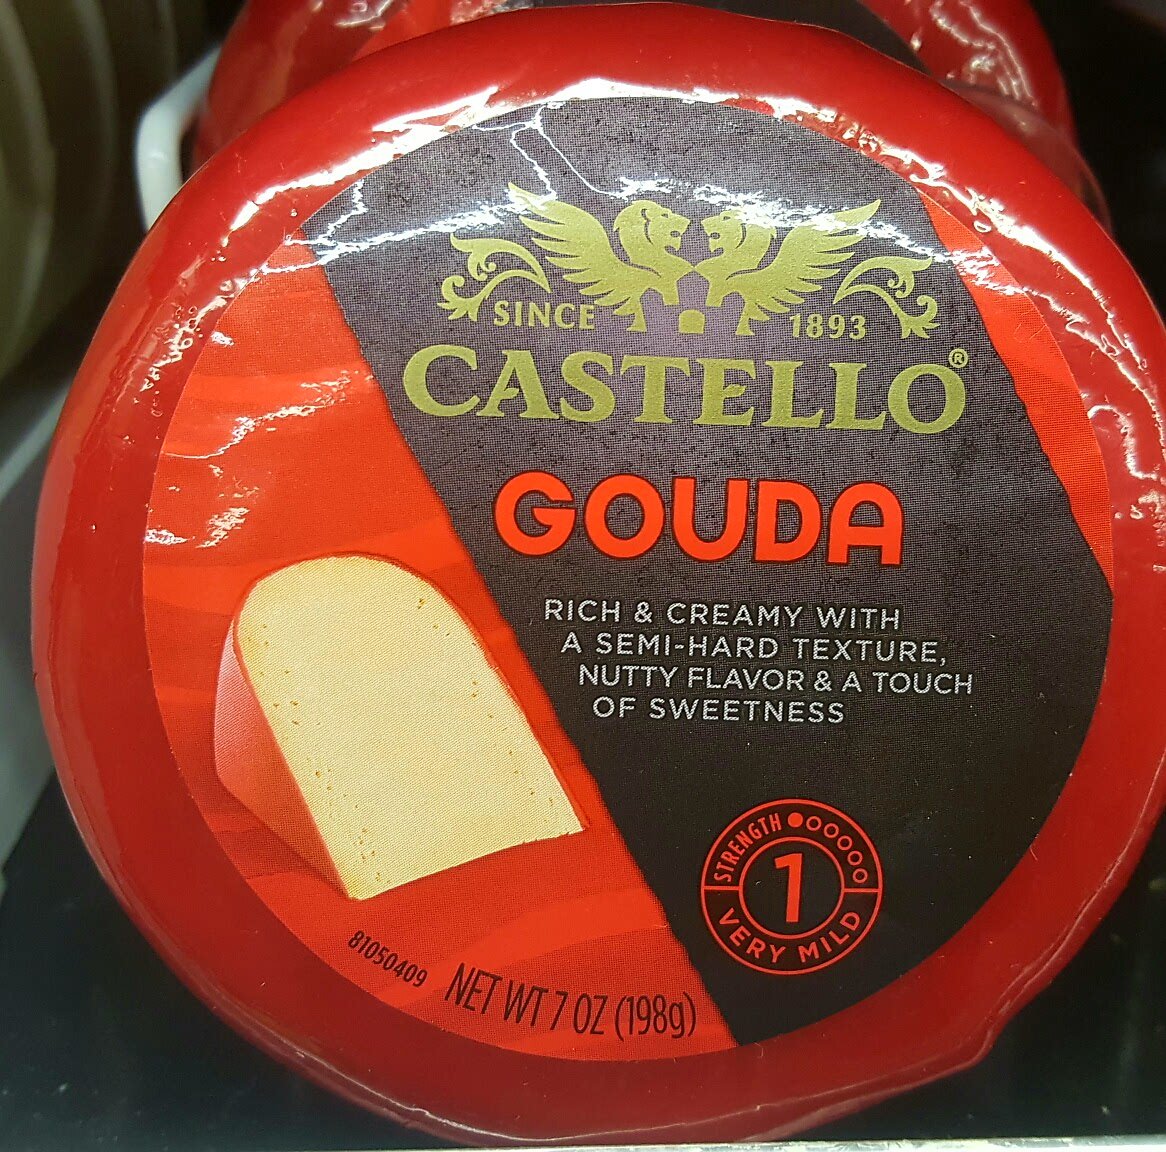 Oct 17 Castello gouda cheese.jpg